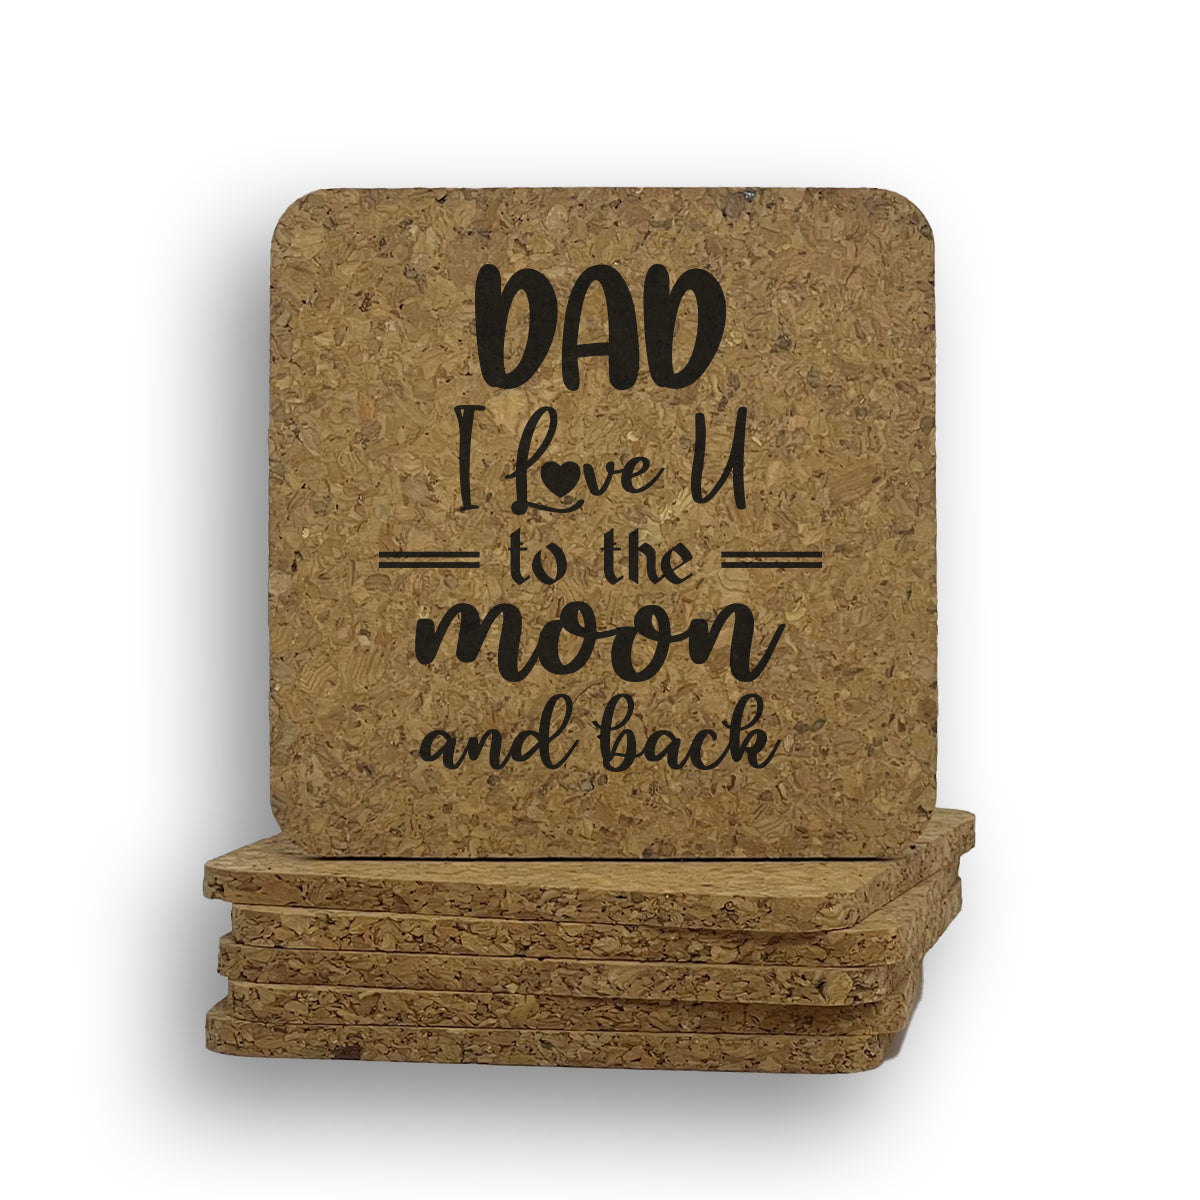 Dad Love Moon Back Coaster